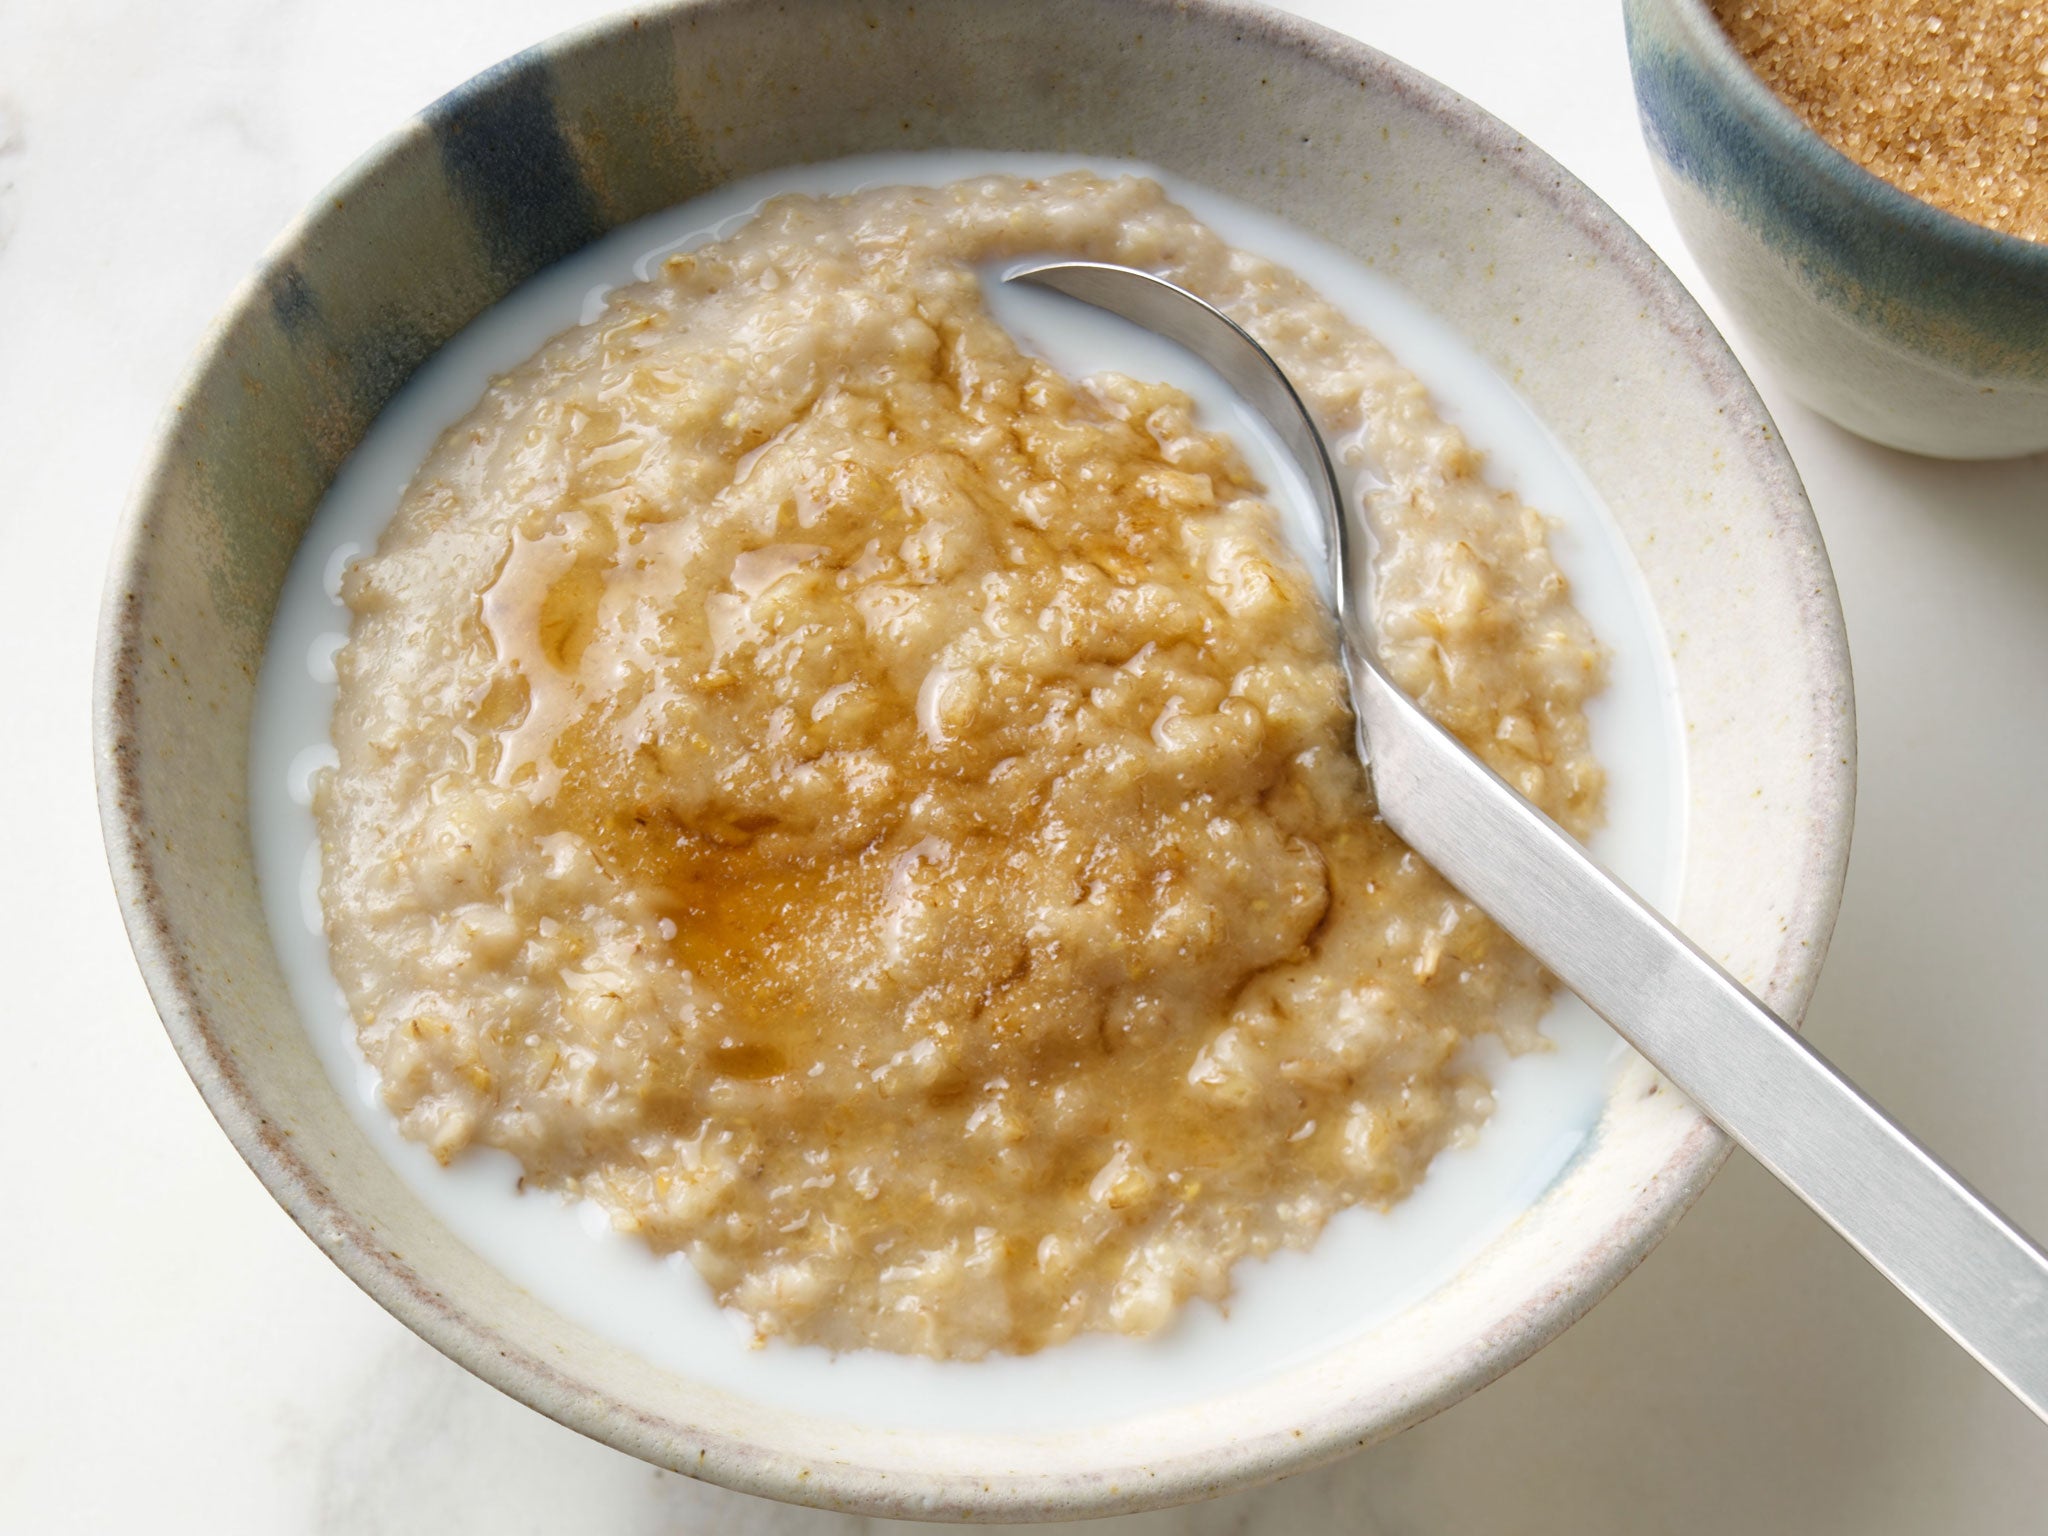 Morning glory: traditional porridge